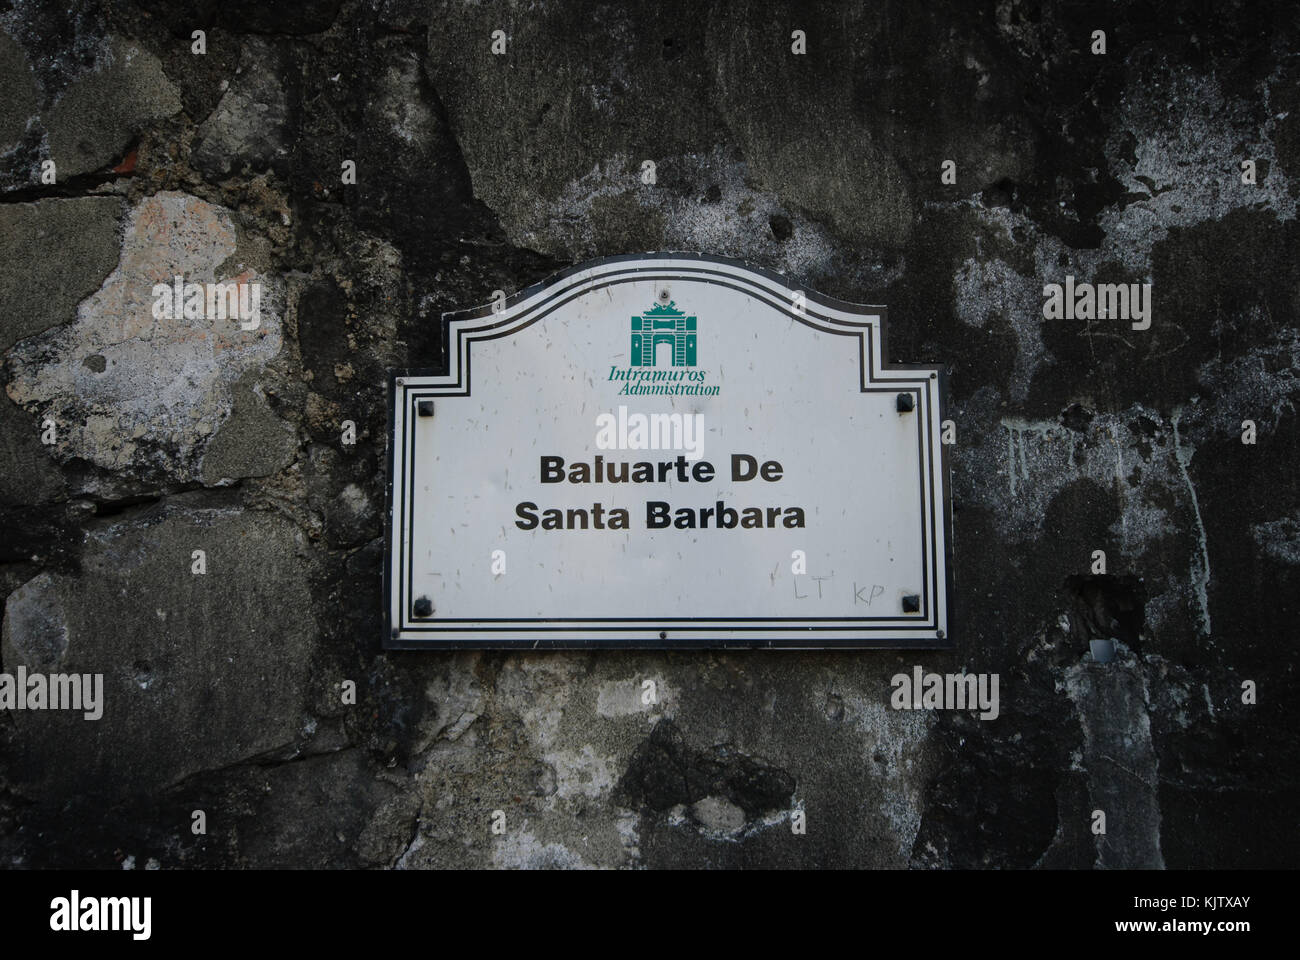 Baluarte de Santa Barbara, Intramuros, Manila, Philippines. Stock Photo